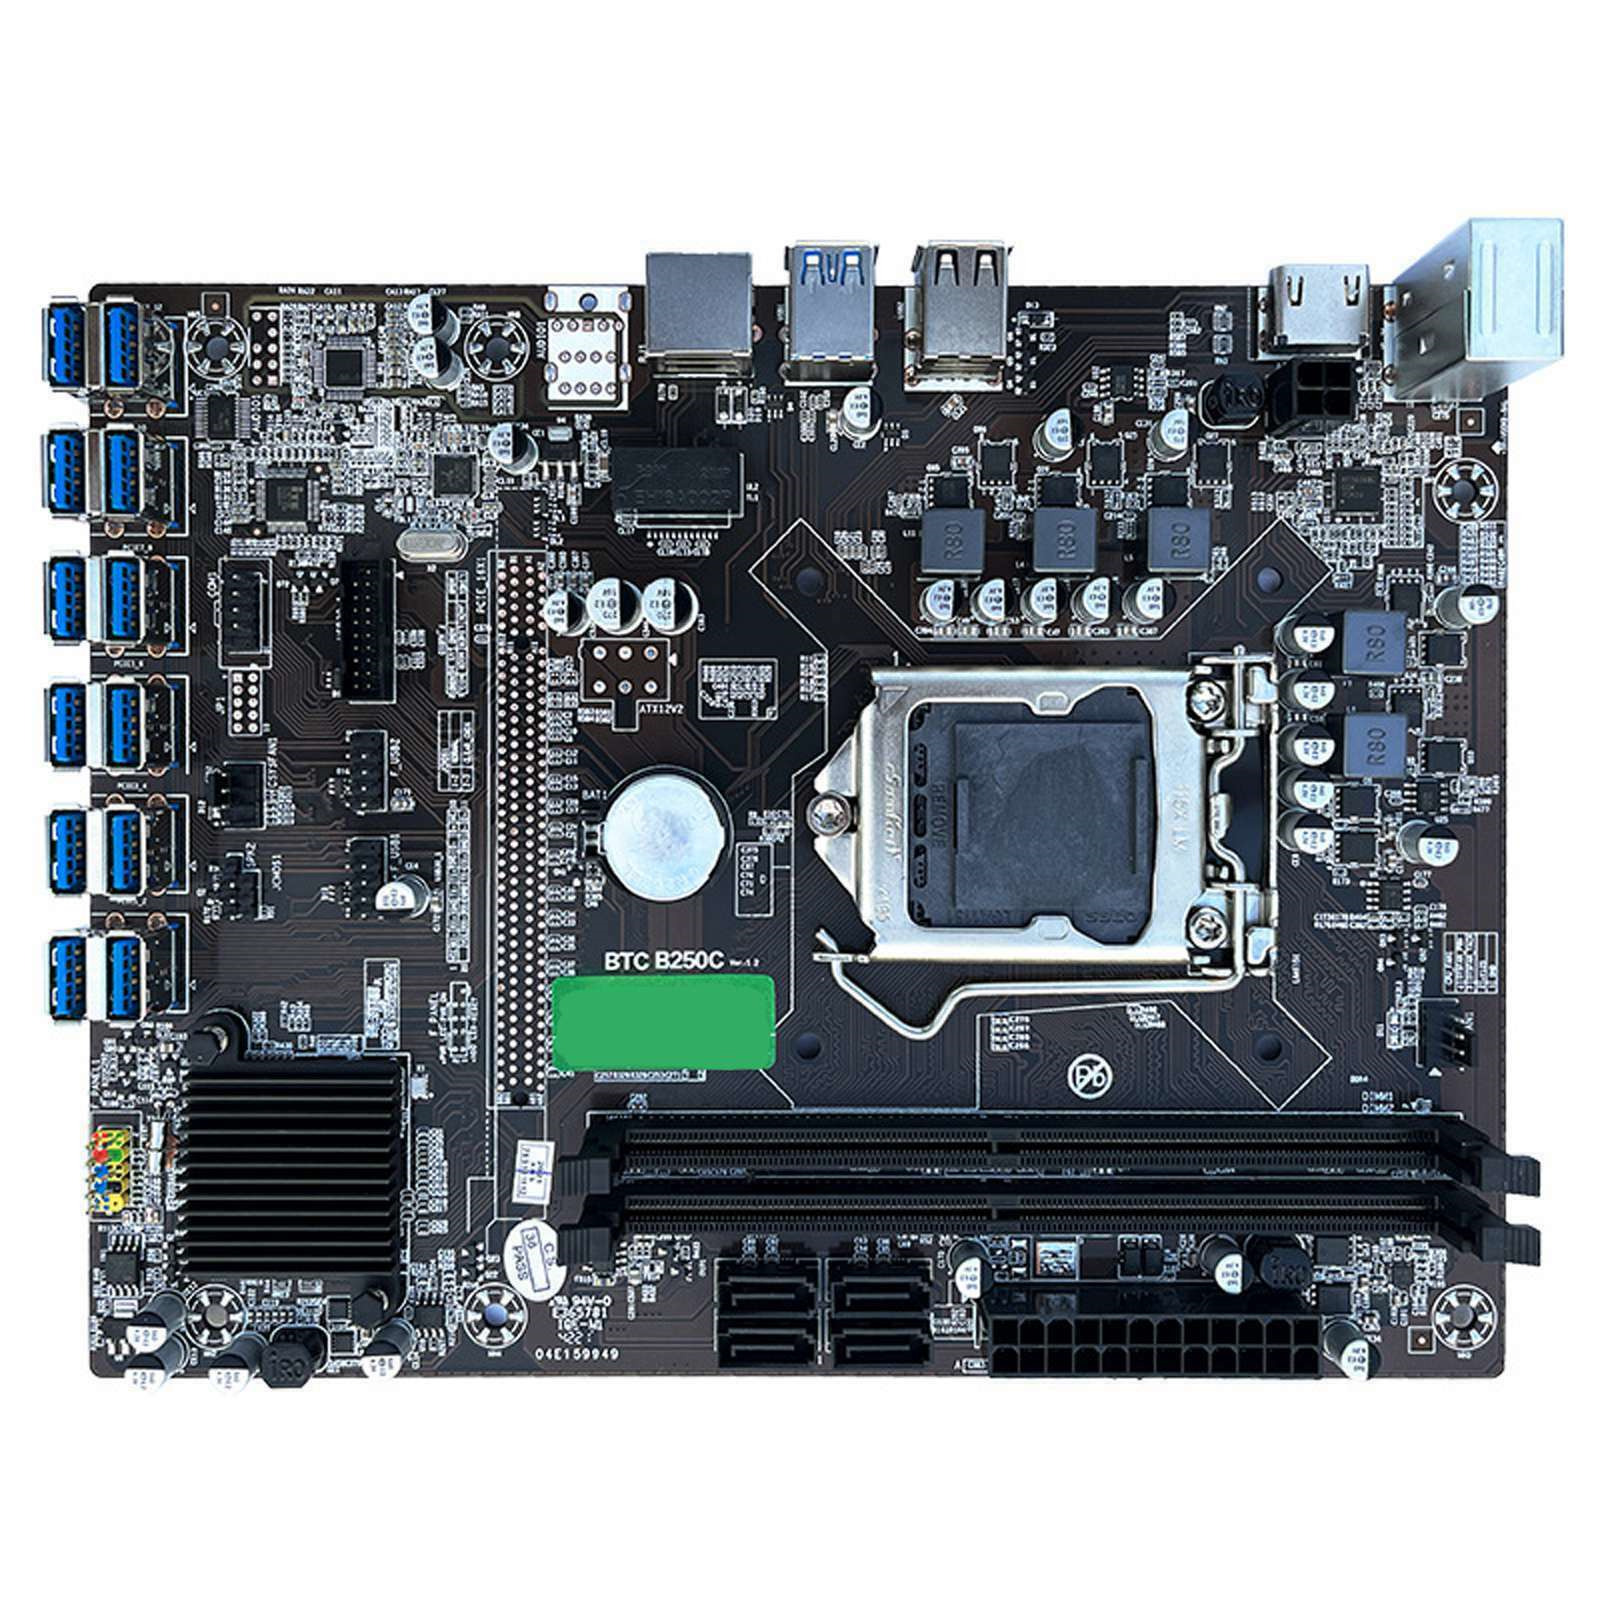 B250C-BTC PCI Express DDR4 Computer Miner Motherboard for LGA1151 Gen6/7 Mining